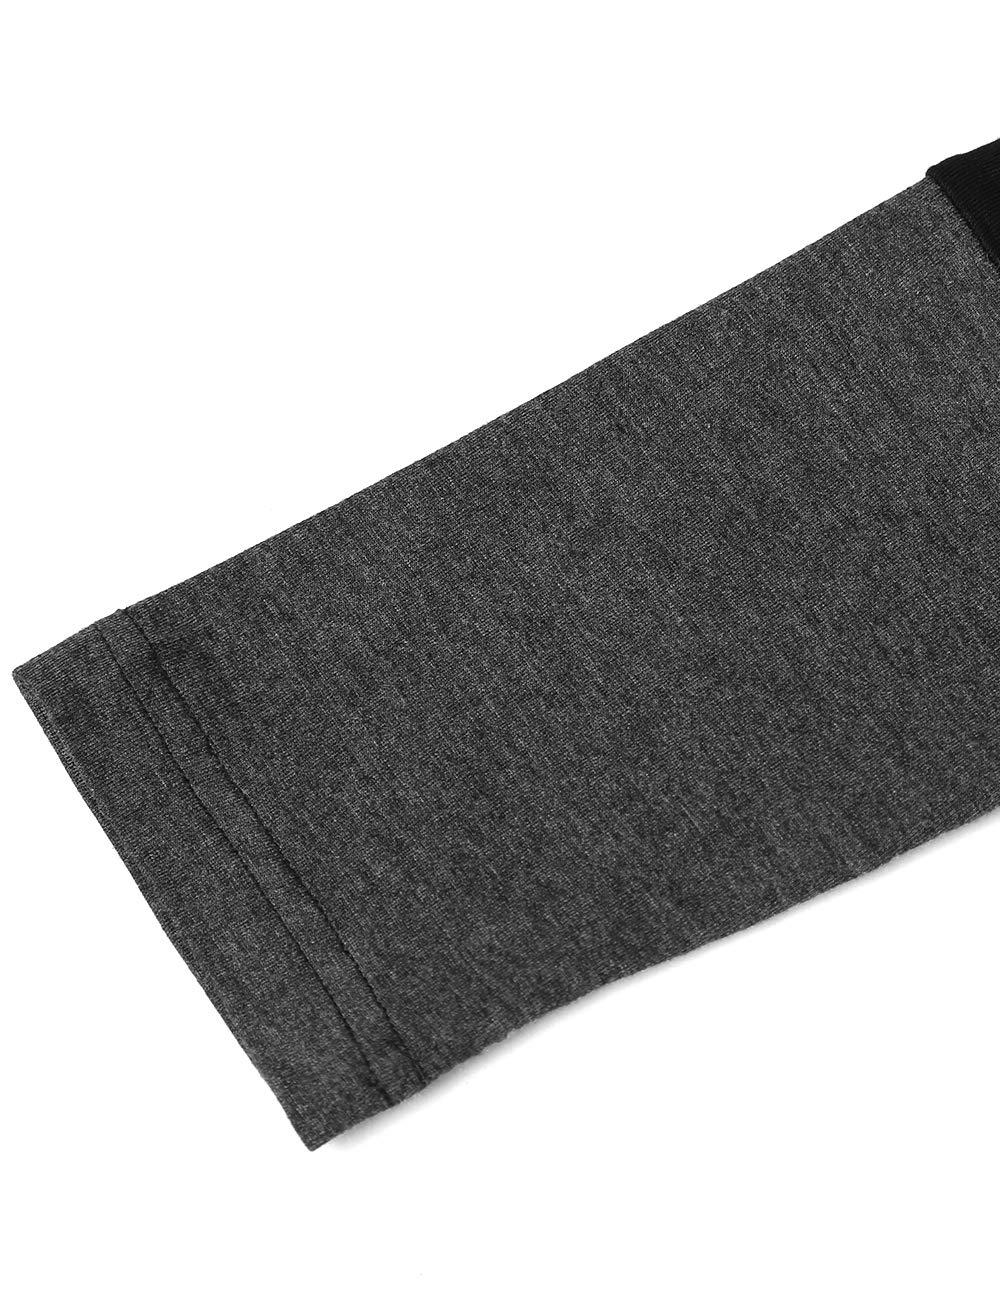 DJT Long Sleeve Black Grey Women's  Tunic Shirts Scoop Neck Hanky Hem Color Block Stretch Casual Fall T Shirt Tops